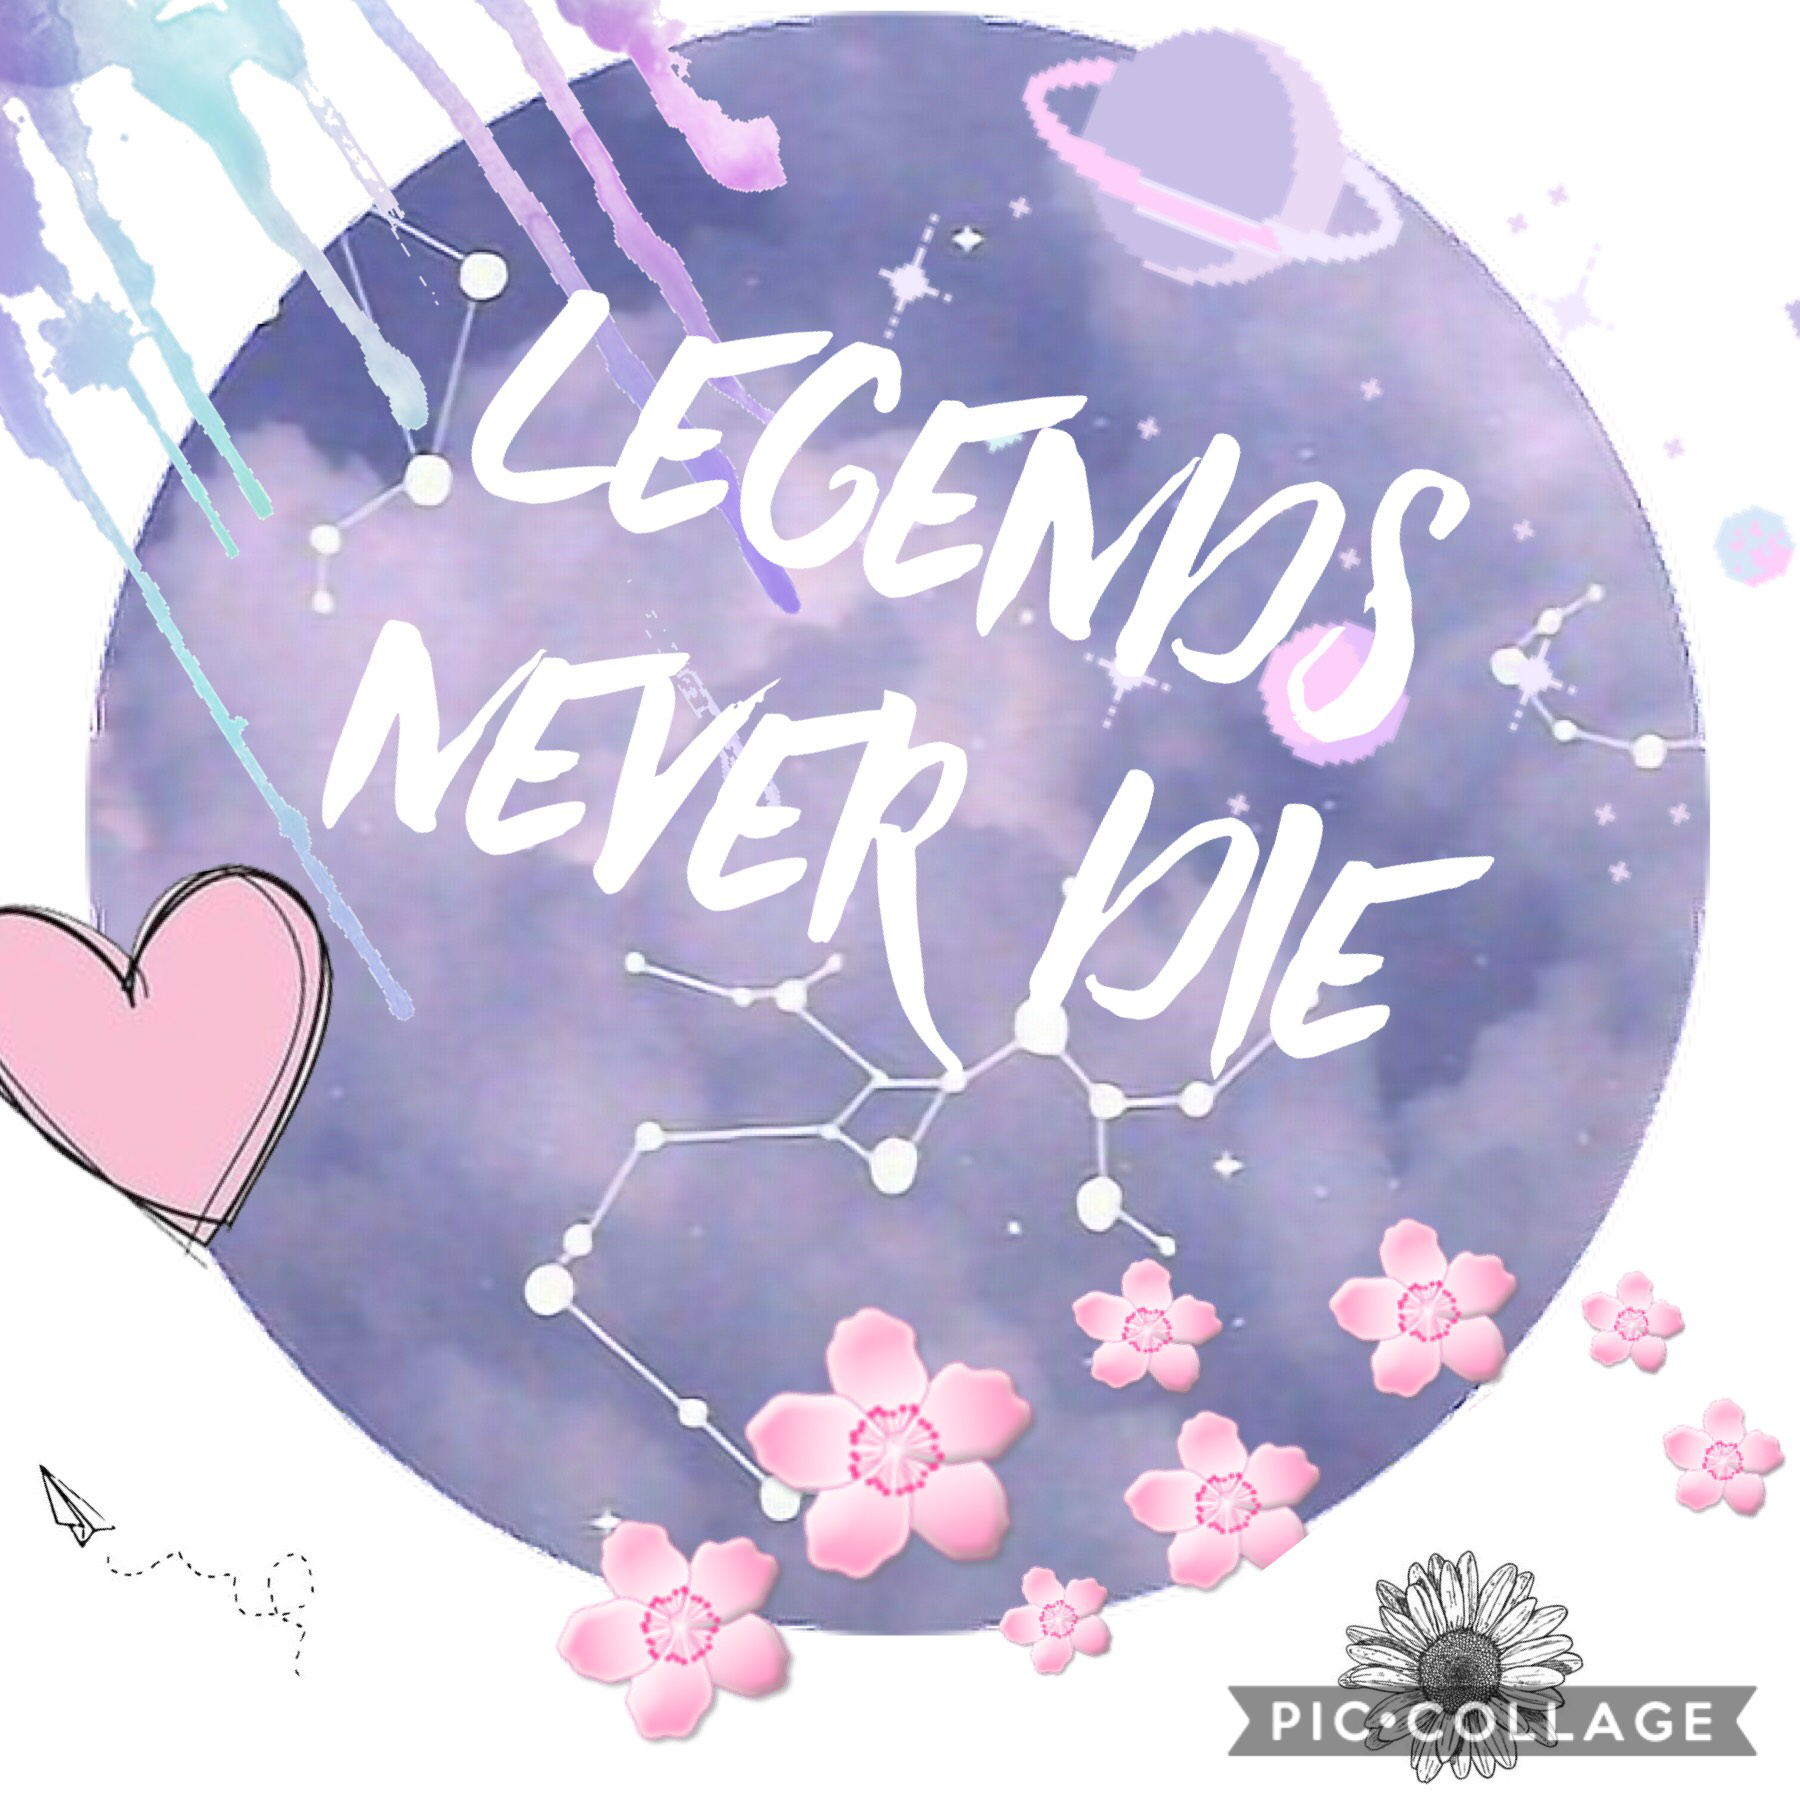 Legends never die 🤪